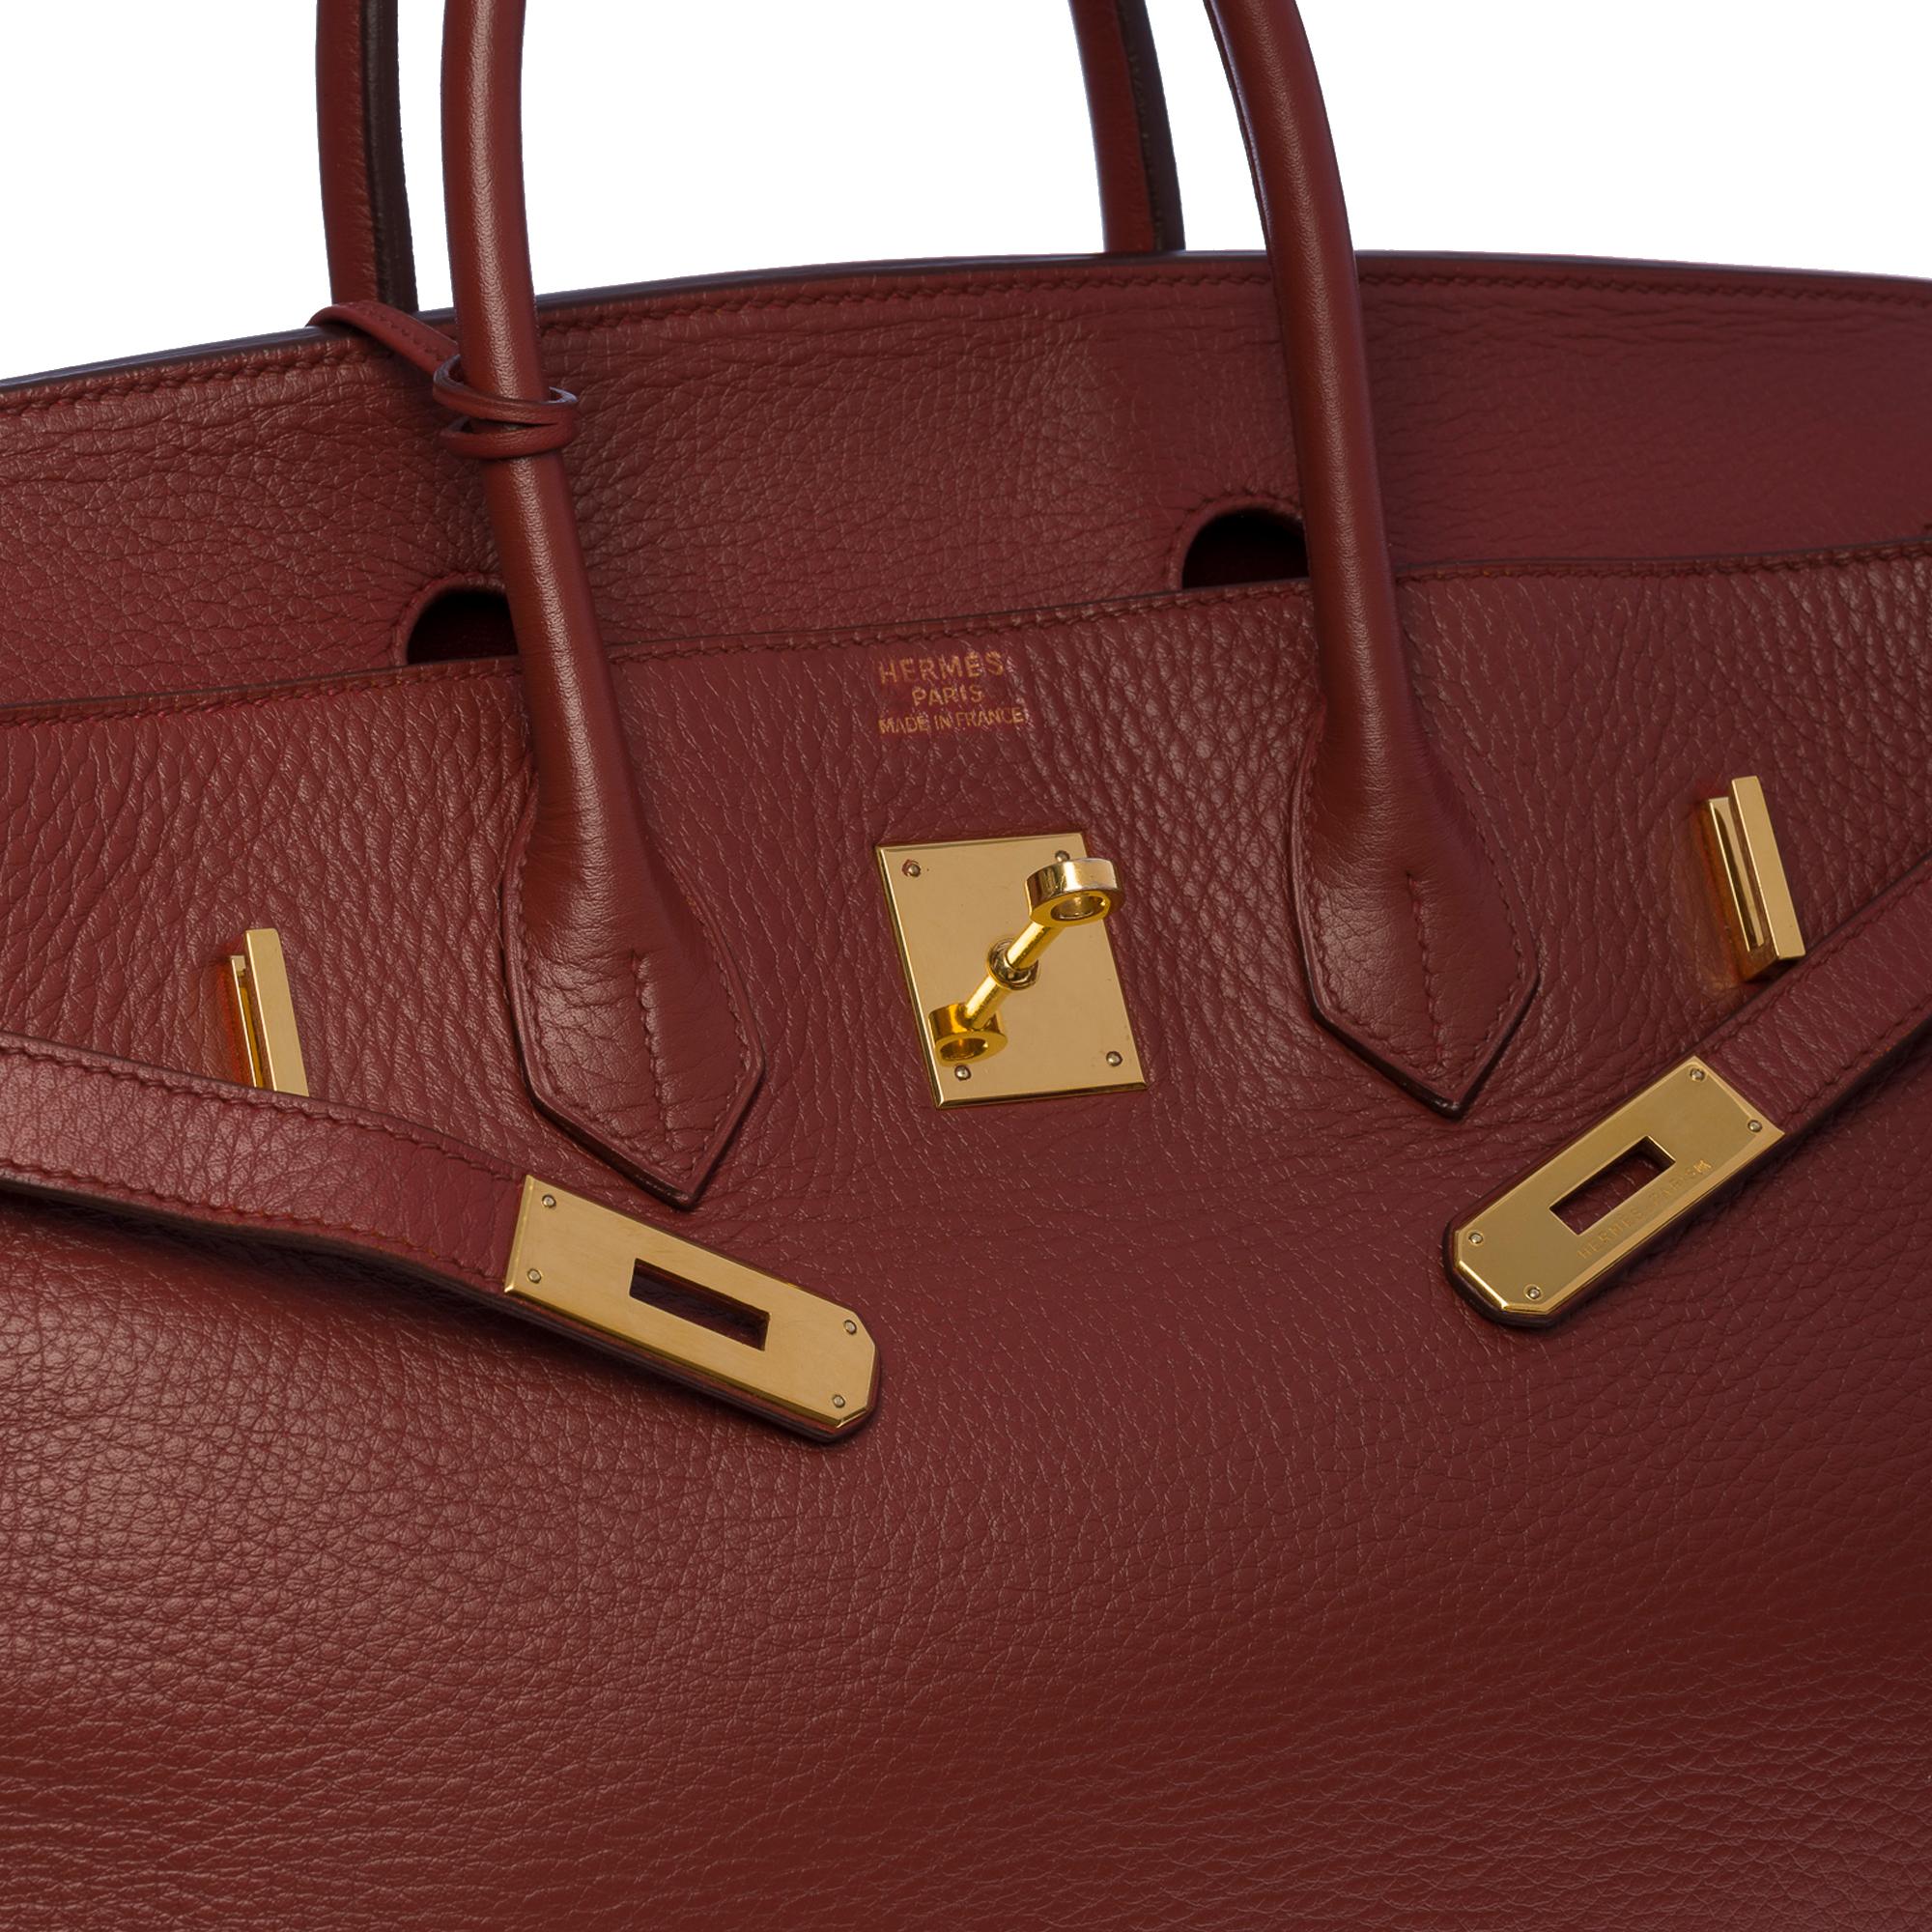 Brown Amazing Hermès Birkin 35 handbag in Cognac Togo leather, GHW